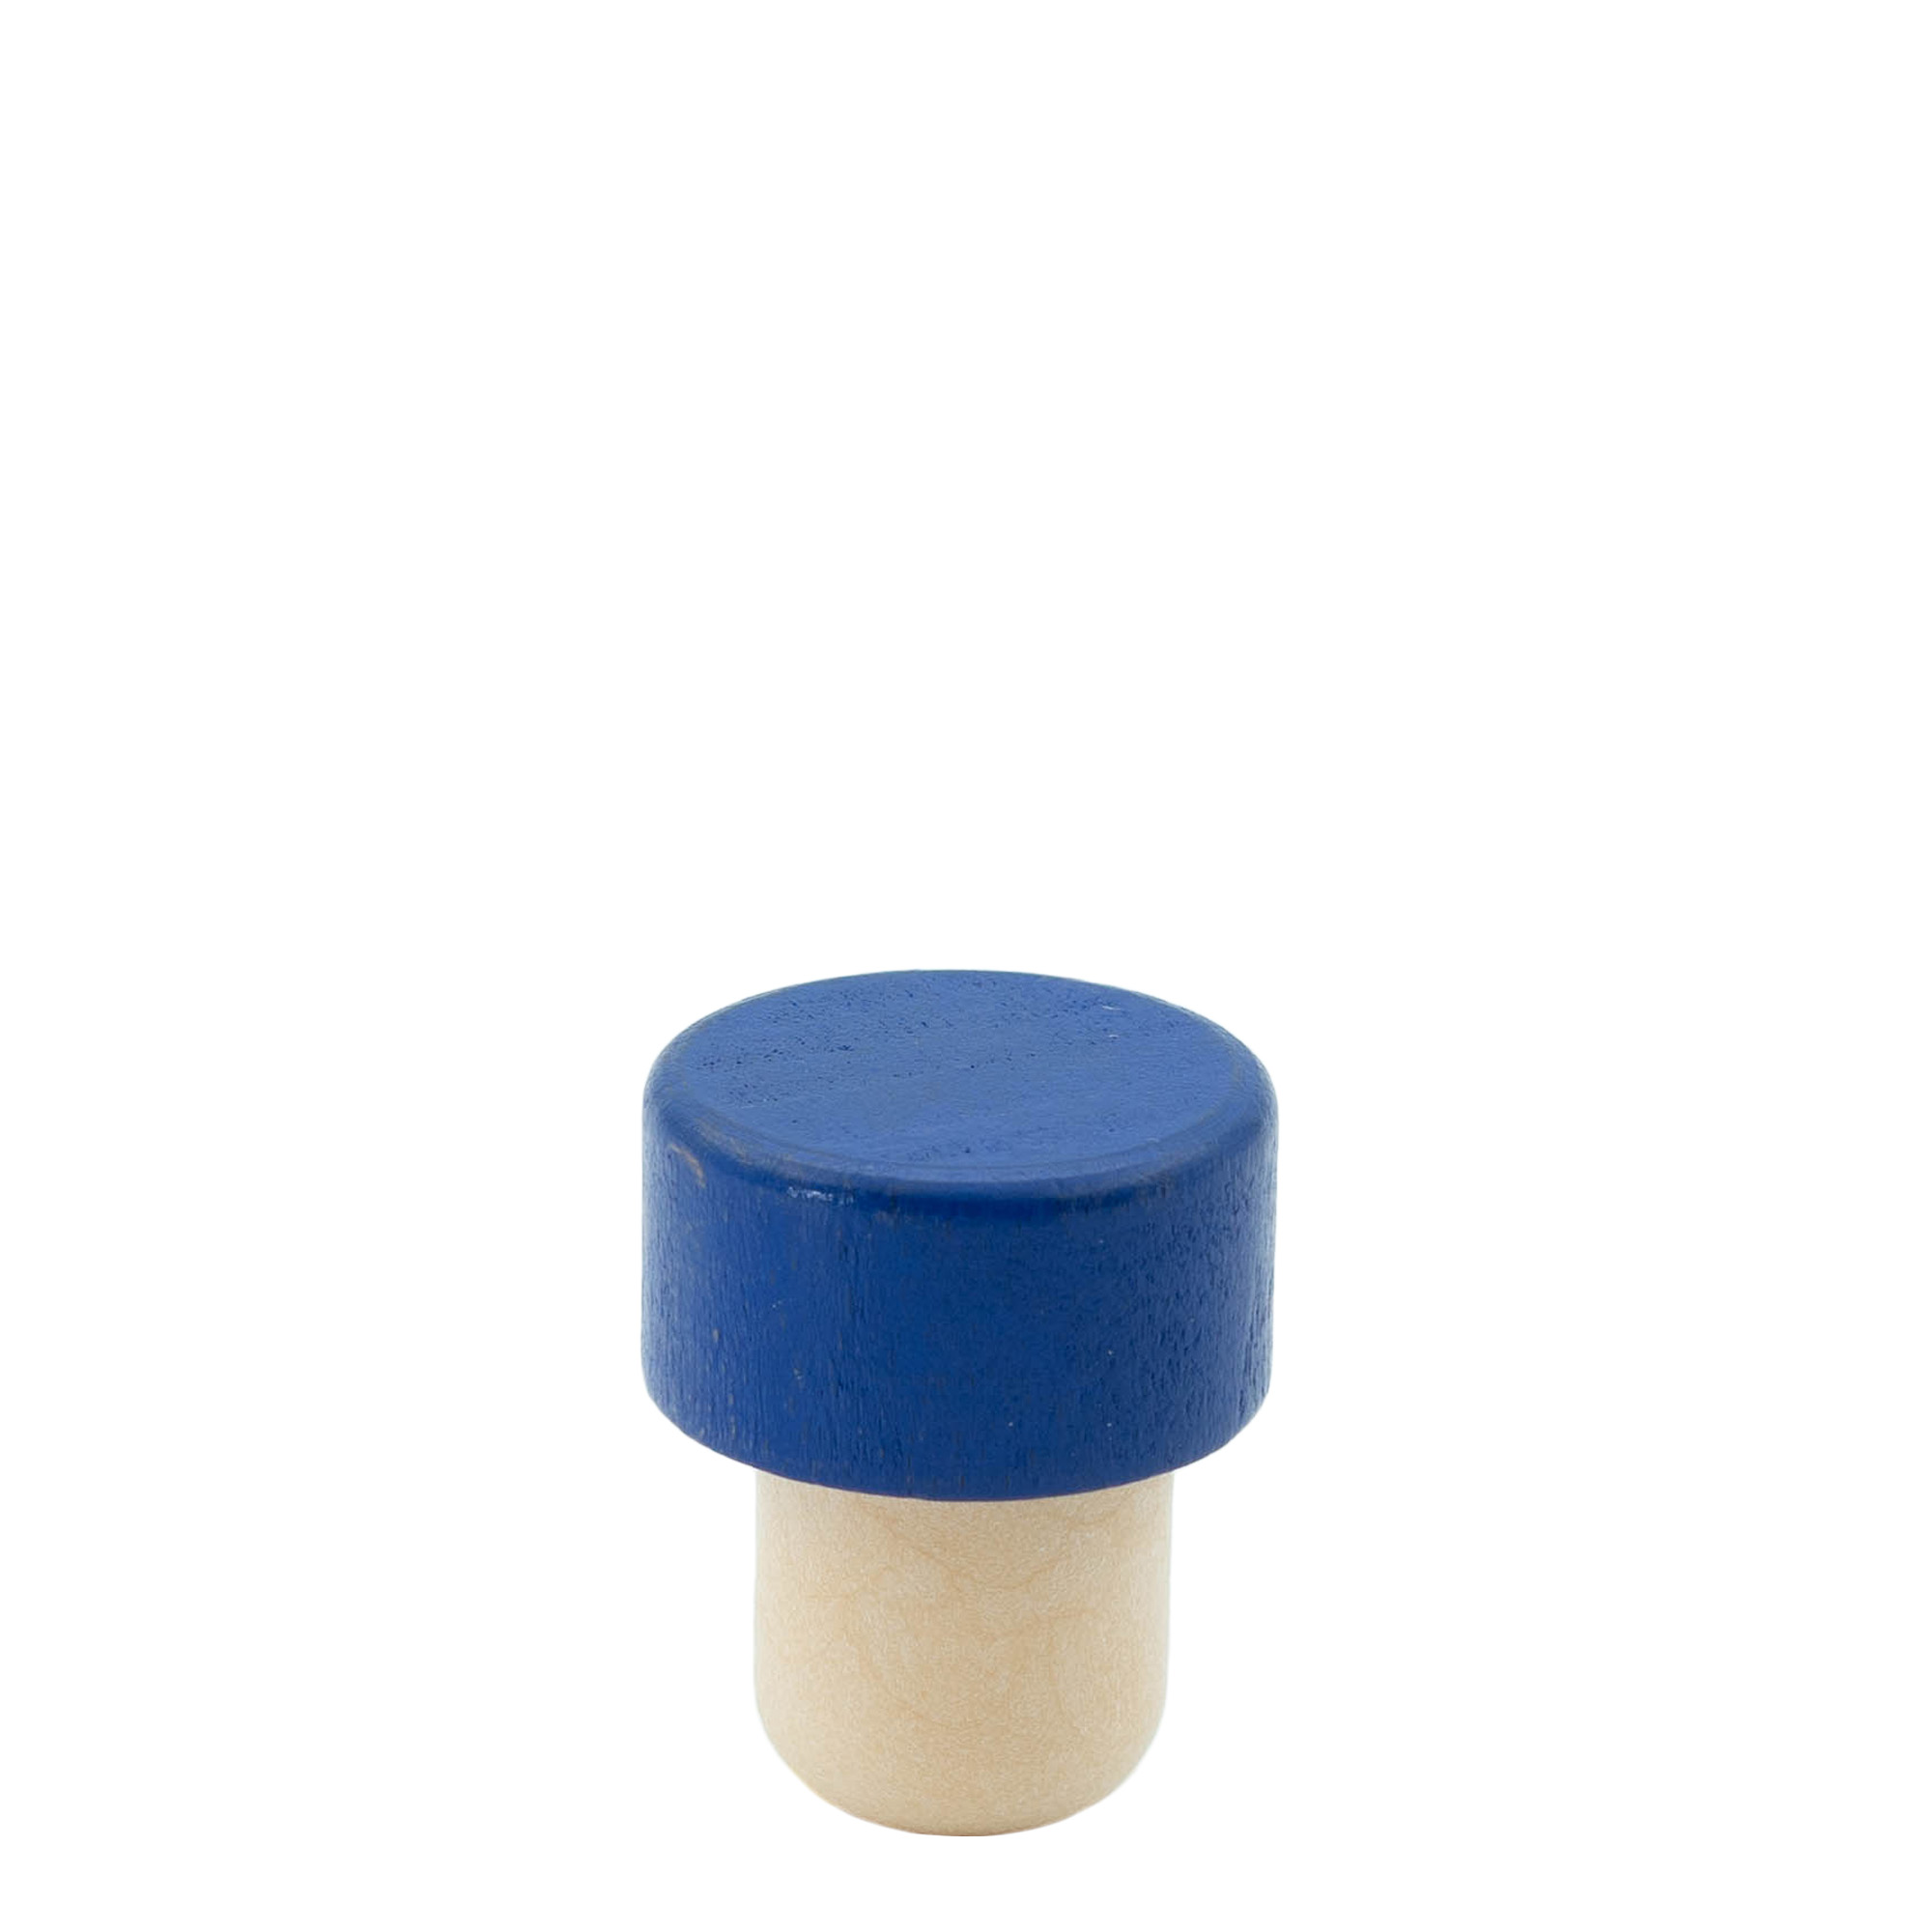 19 mm mushroom cork, wood, blue, for opening: cork